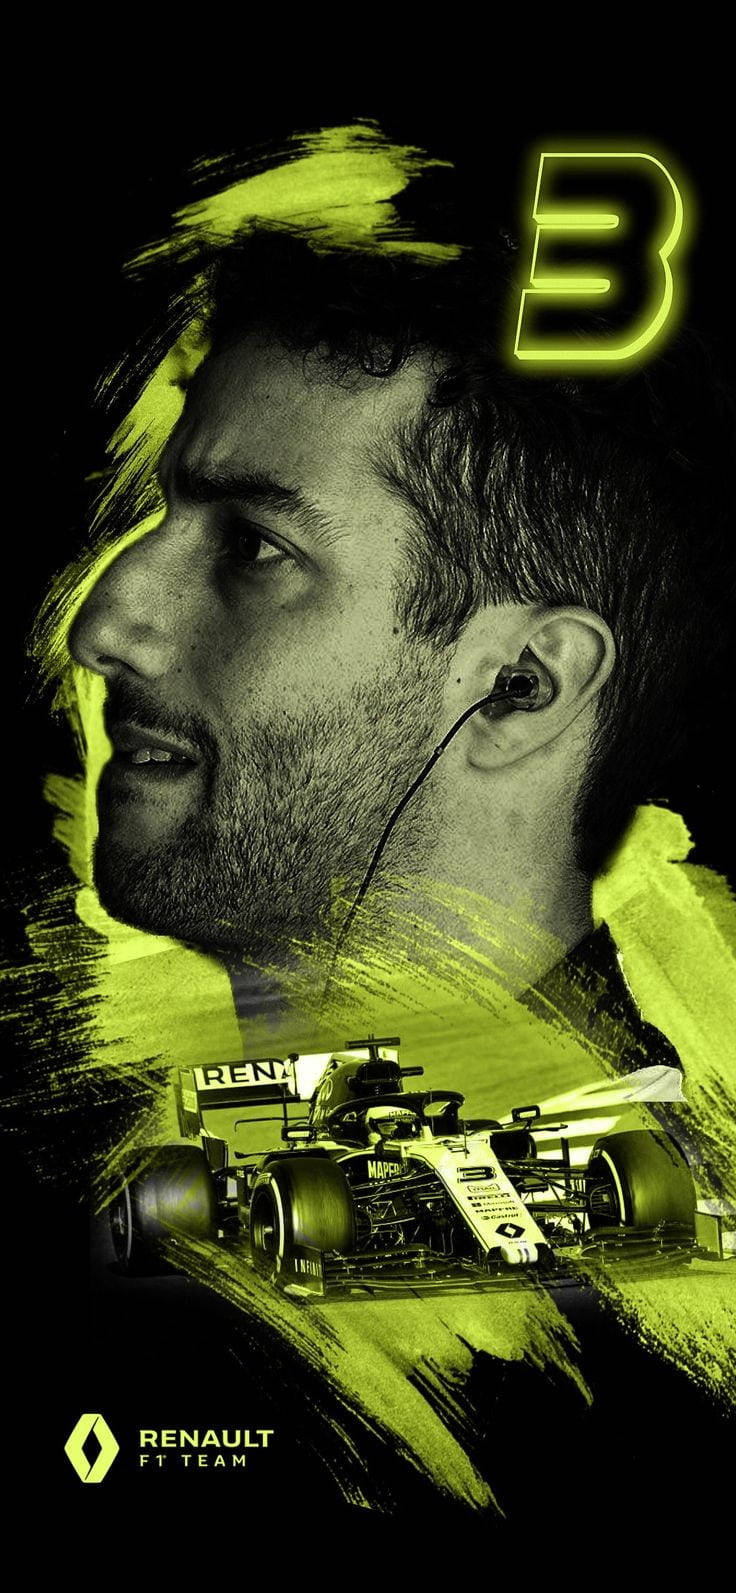 Daniel Ricciardo In Green And Black Abstract Background